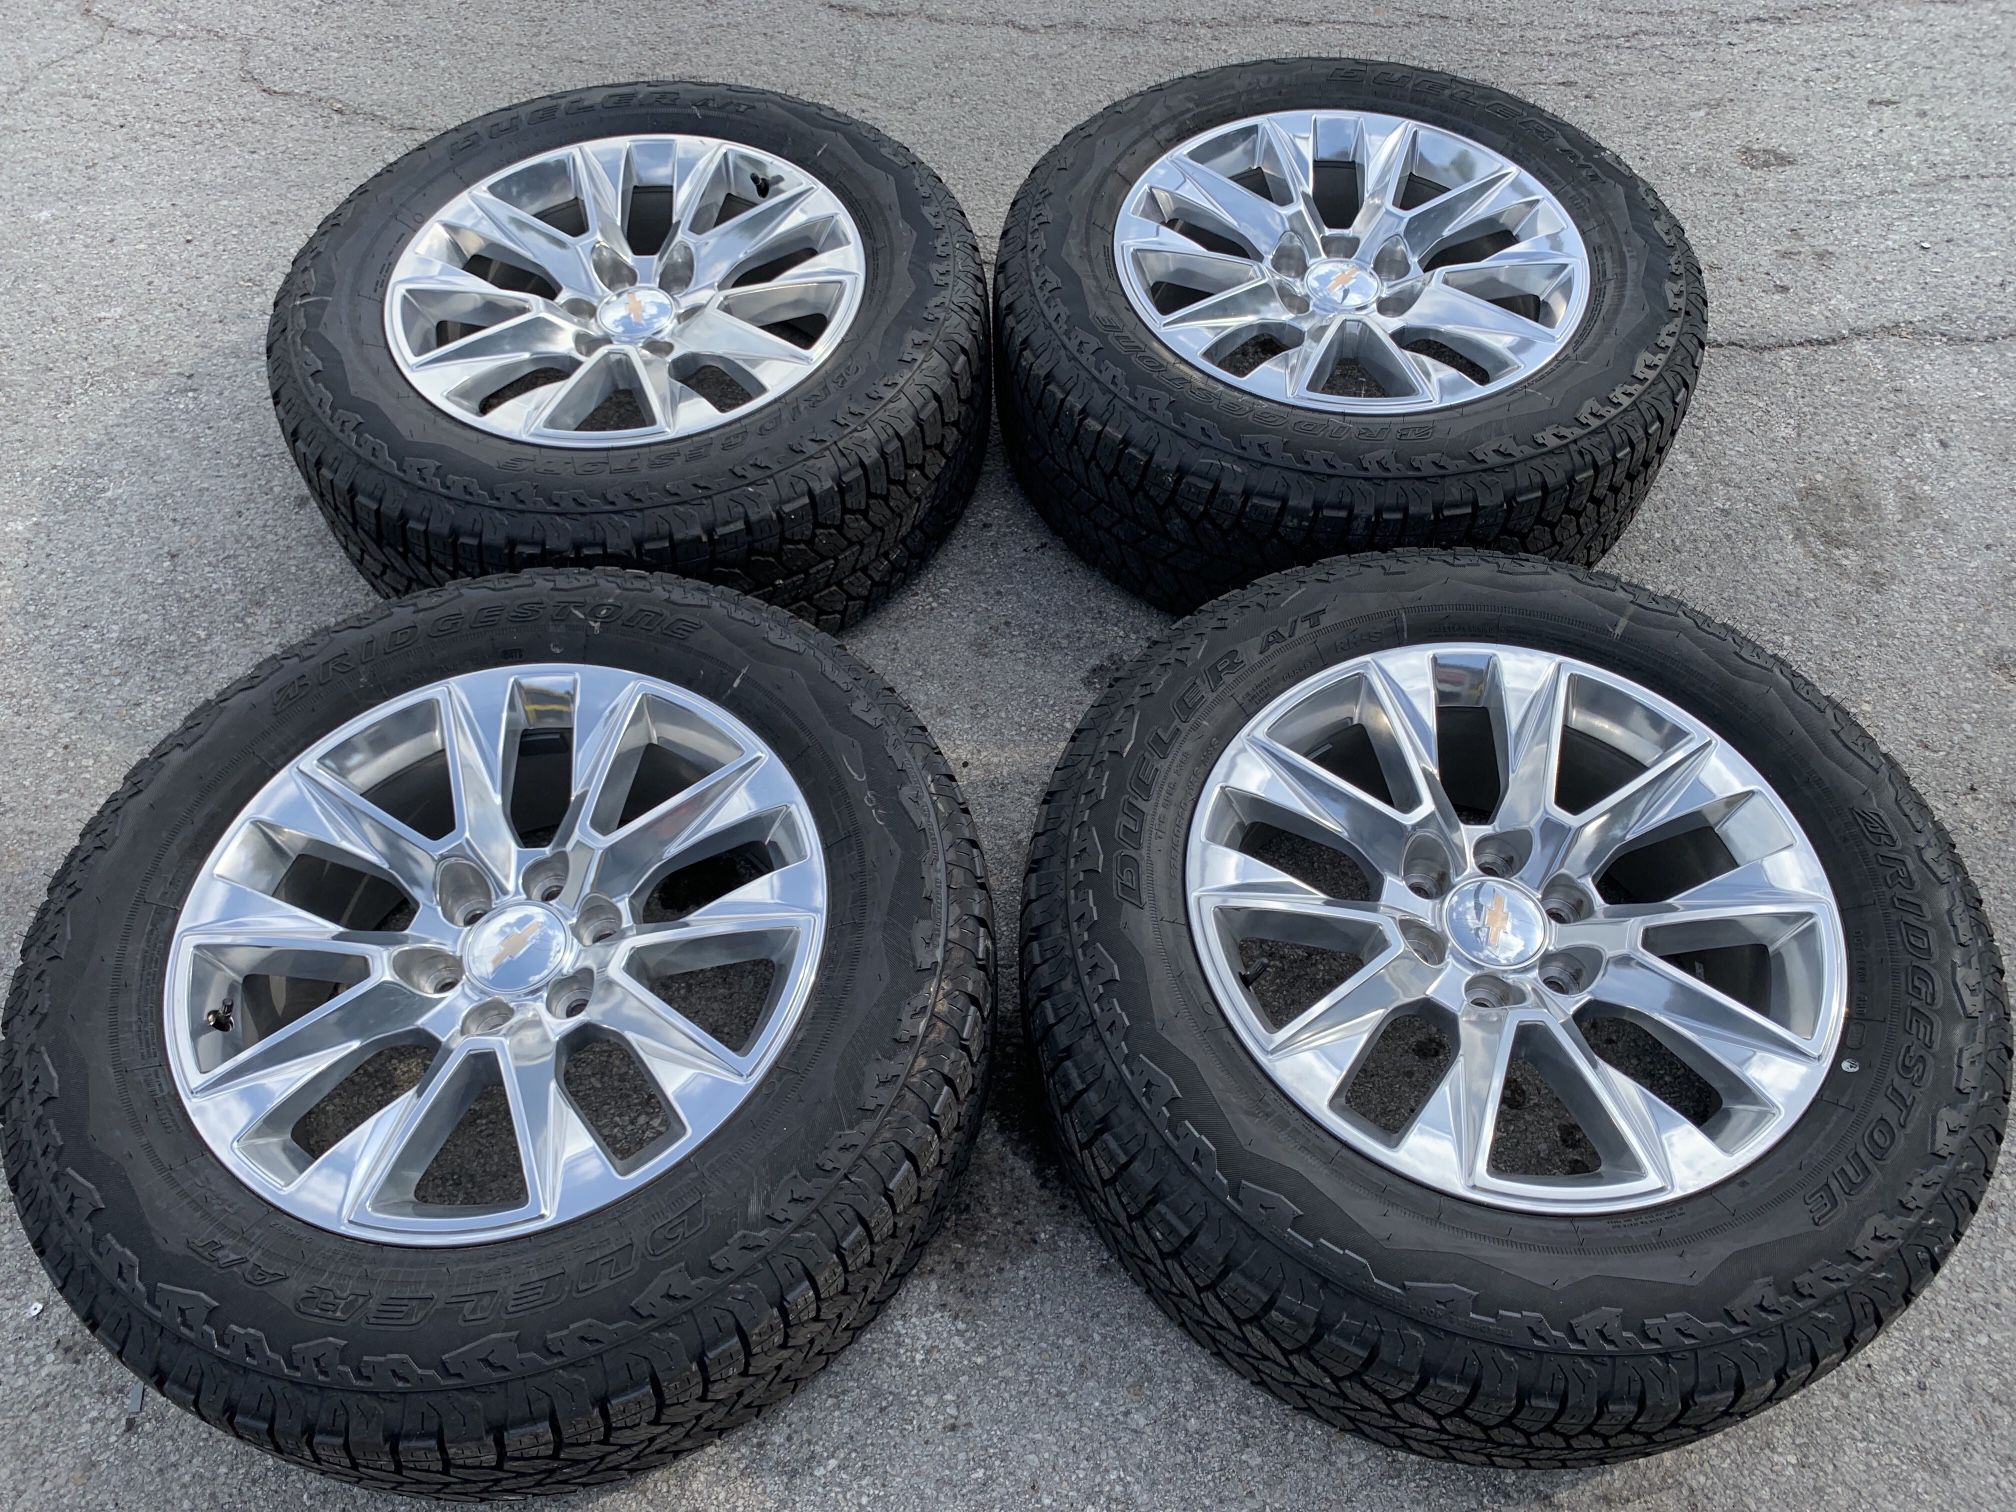 New 20” Chevy LTZ Rims And Tires 20 Chevrolet Wheels Texas Edition RST Silverado Tahoe Rines con Llantas Take offs off  pull pulloffs stock stocks fac